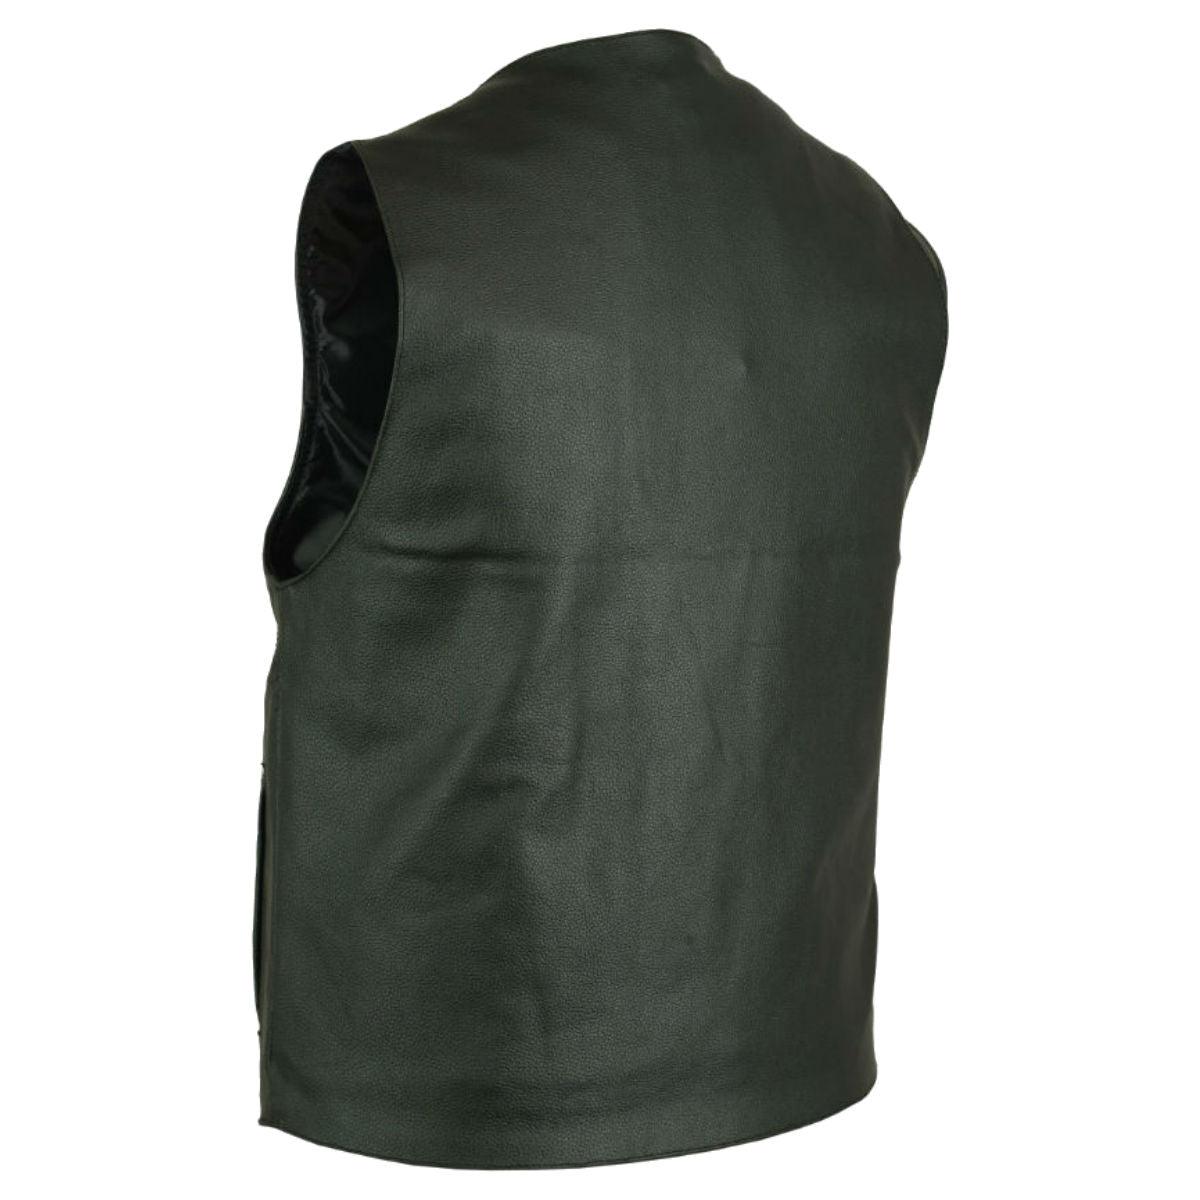 Daniel Smart Single Back Panel Concealed Carry Leather Vest (Buffalo Nickel Head Snaps), Black - American Legend Rider